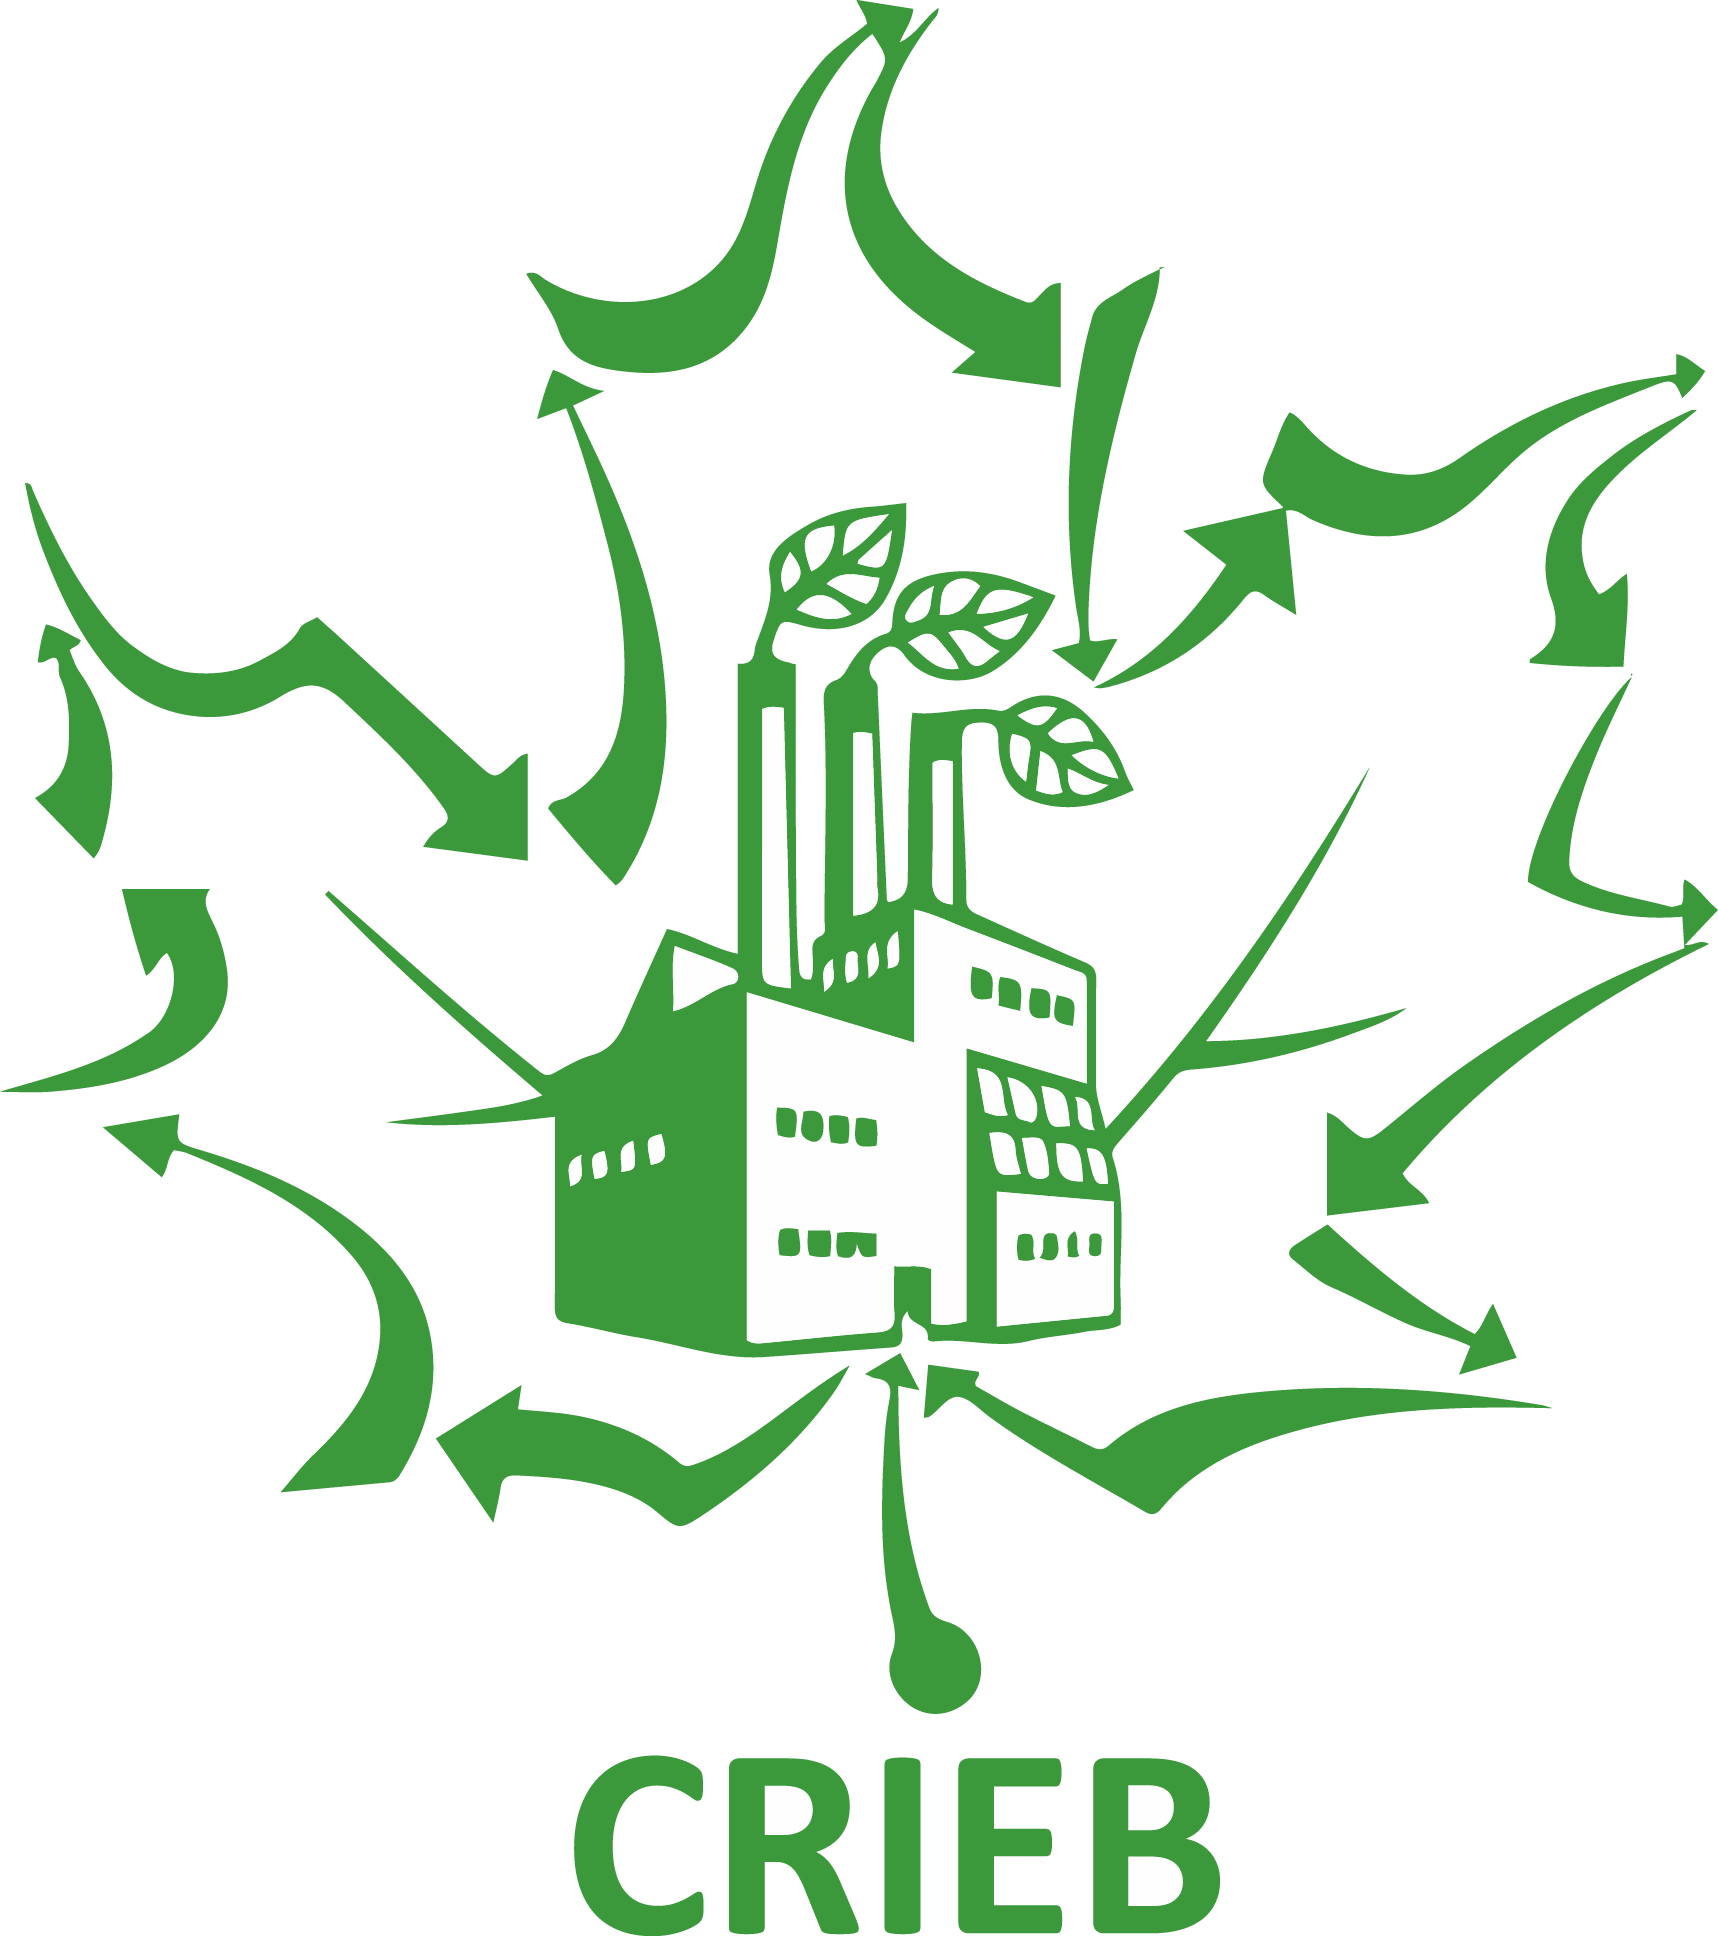 CRIEB logo transparent.png